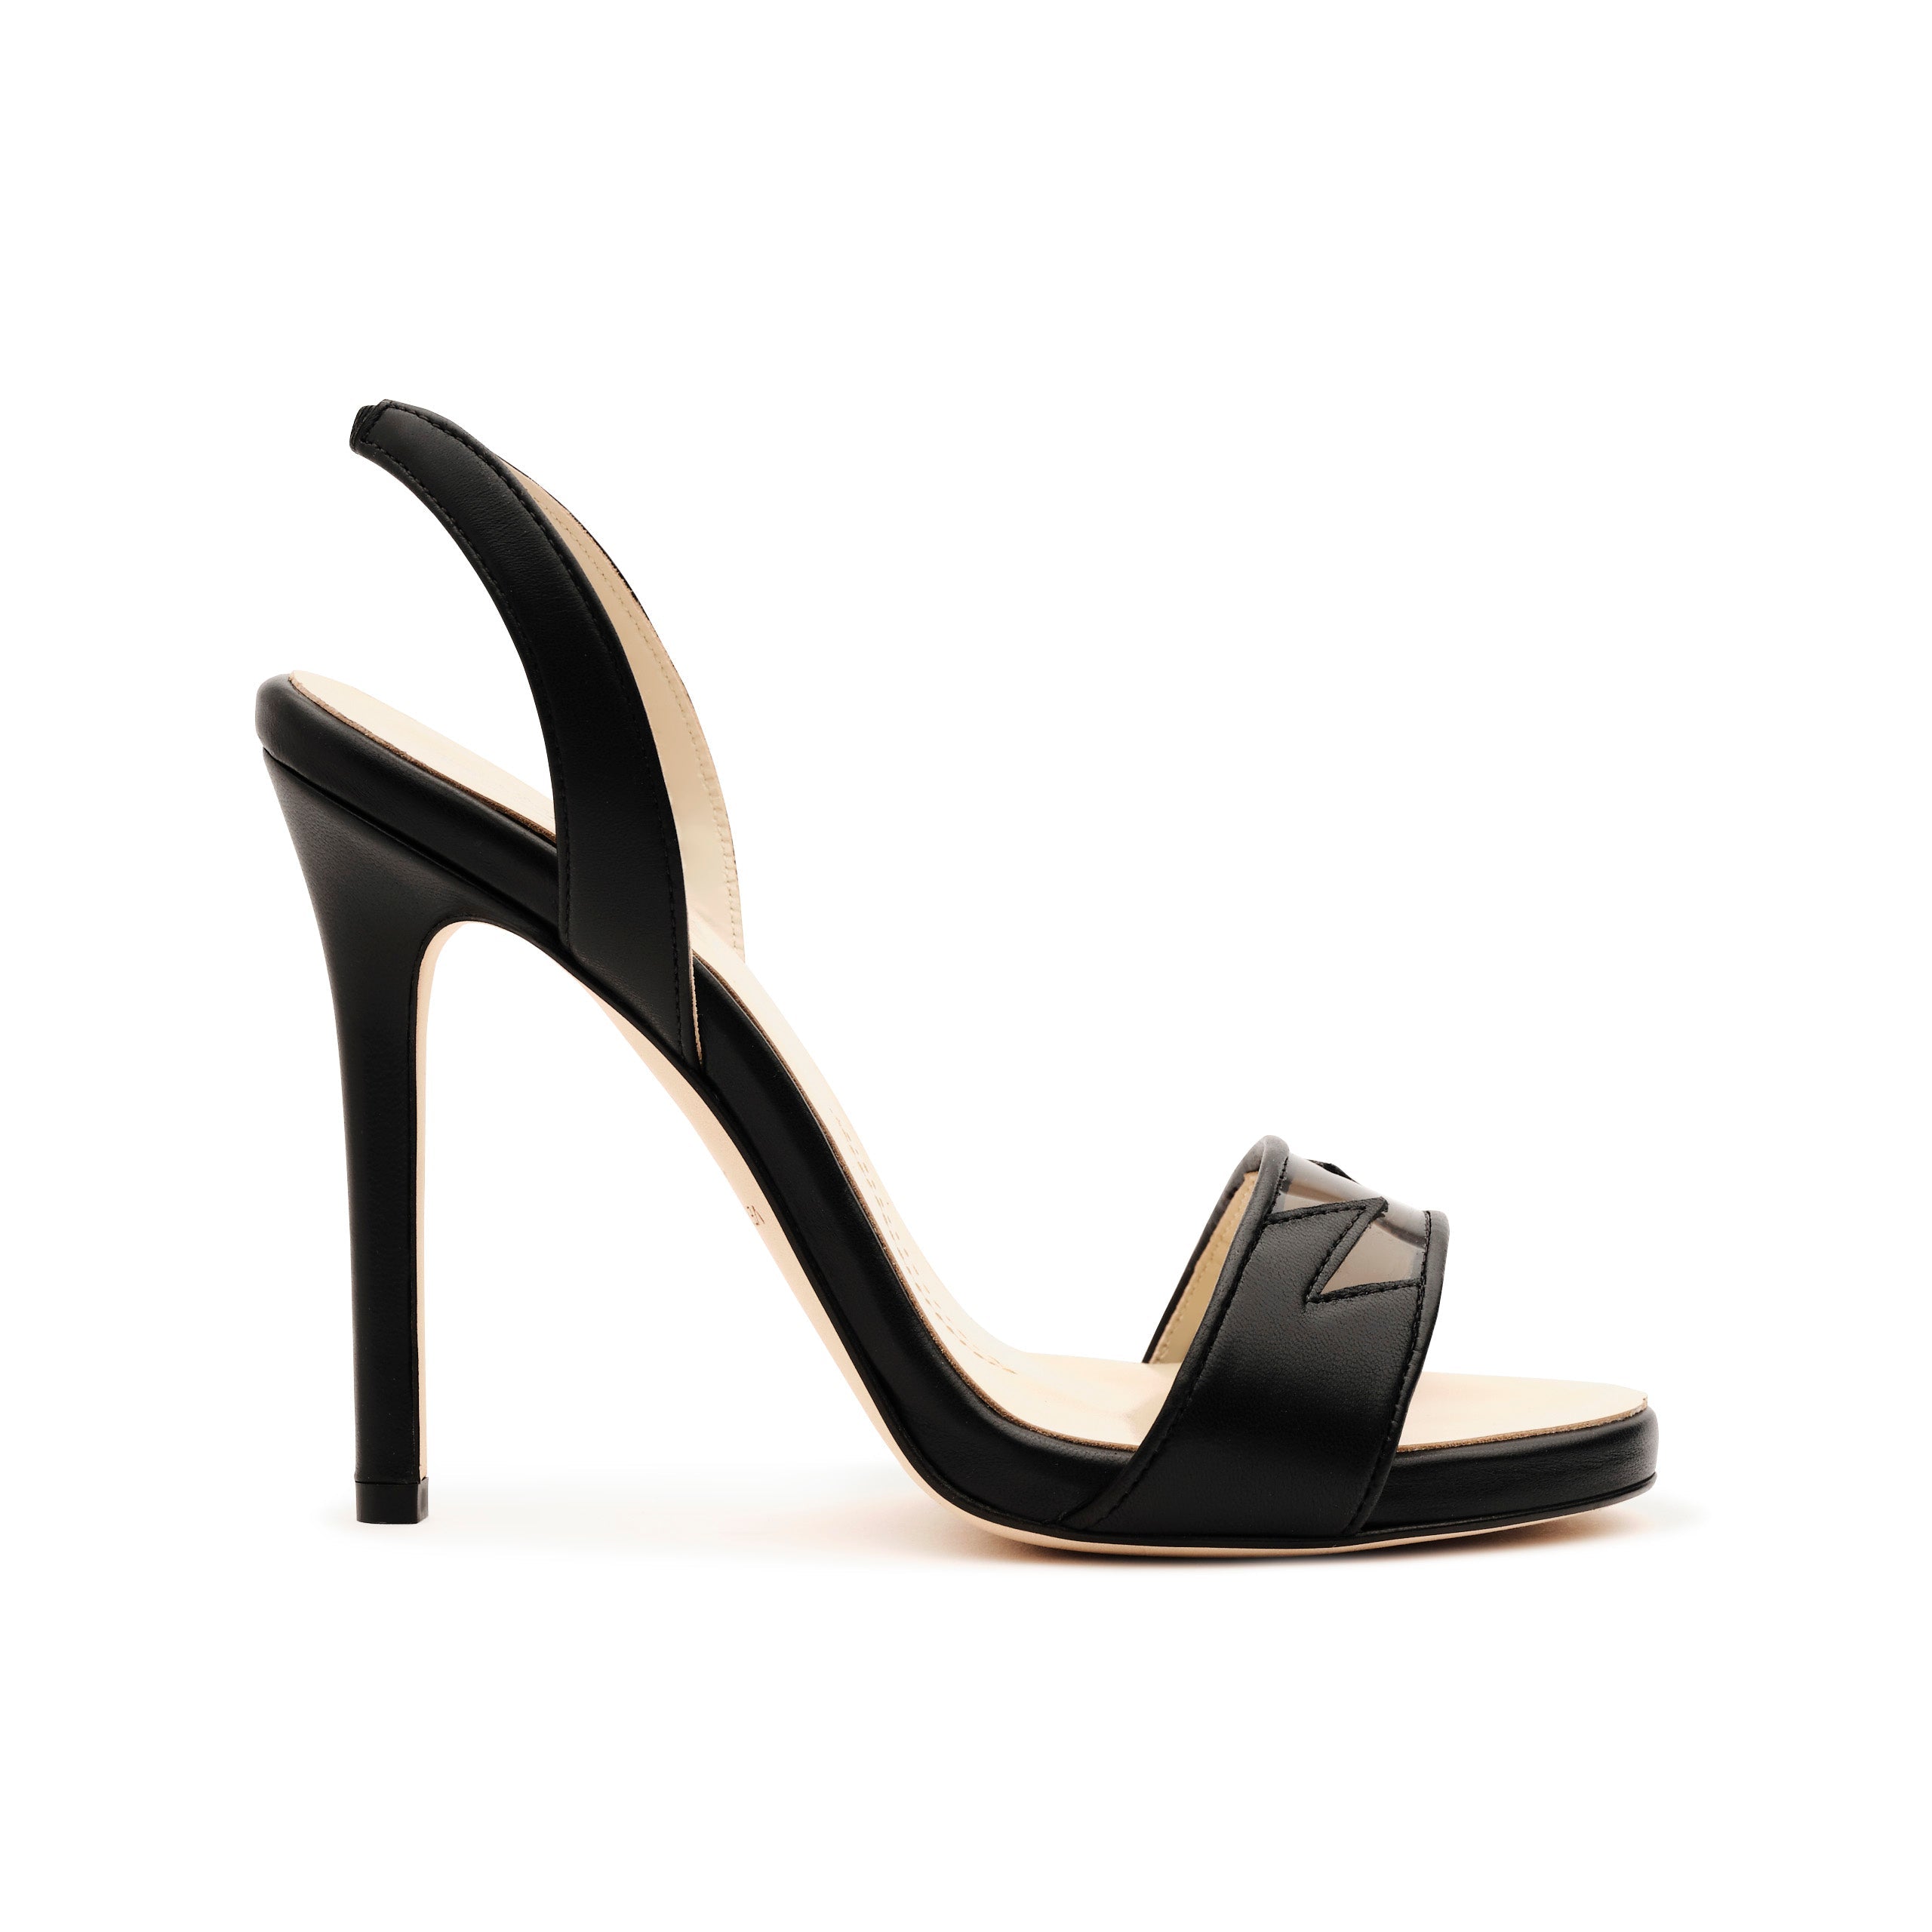 Buy Giselle Black Open Toe High Heels – Tiannia Barnes